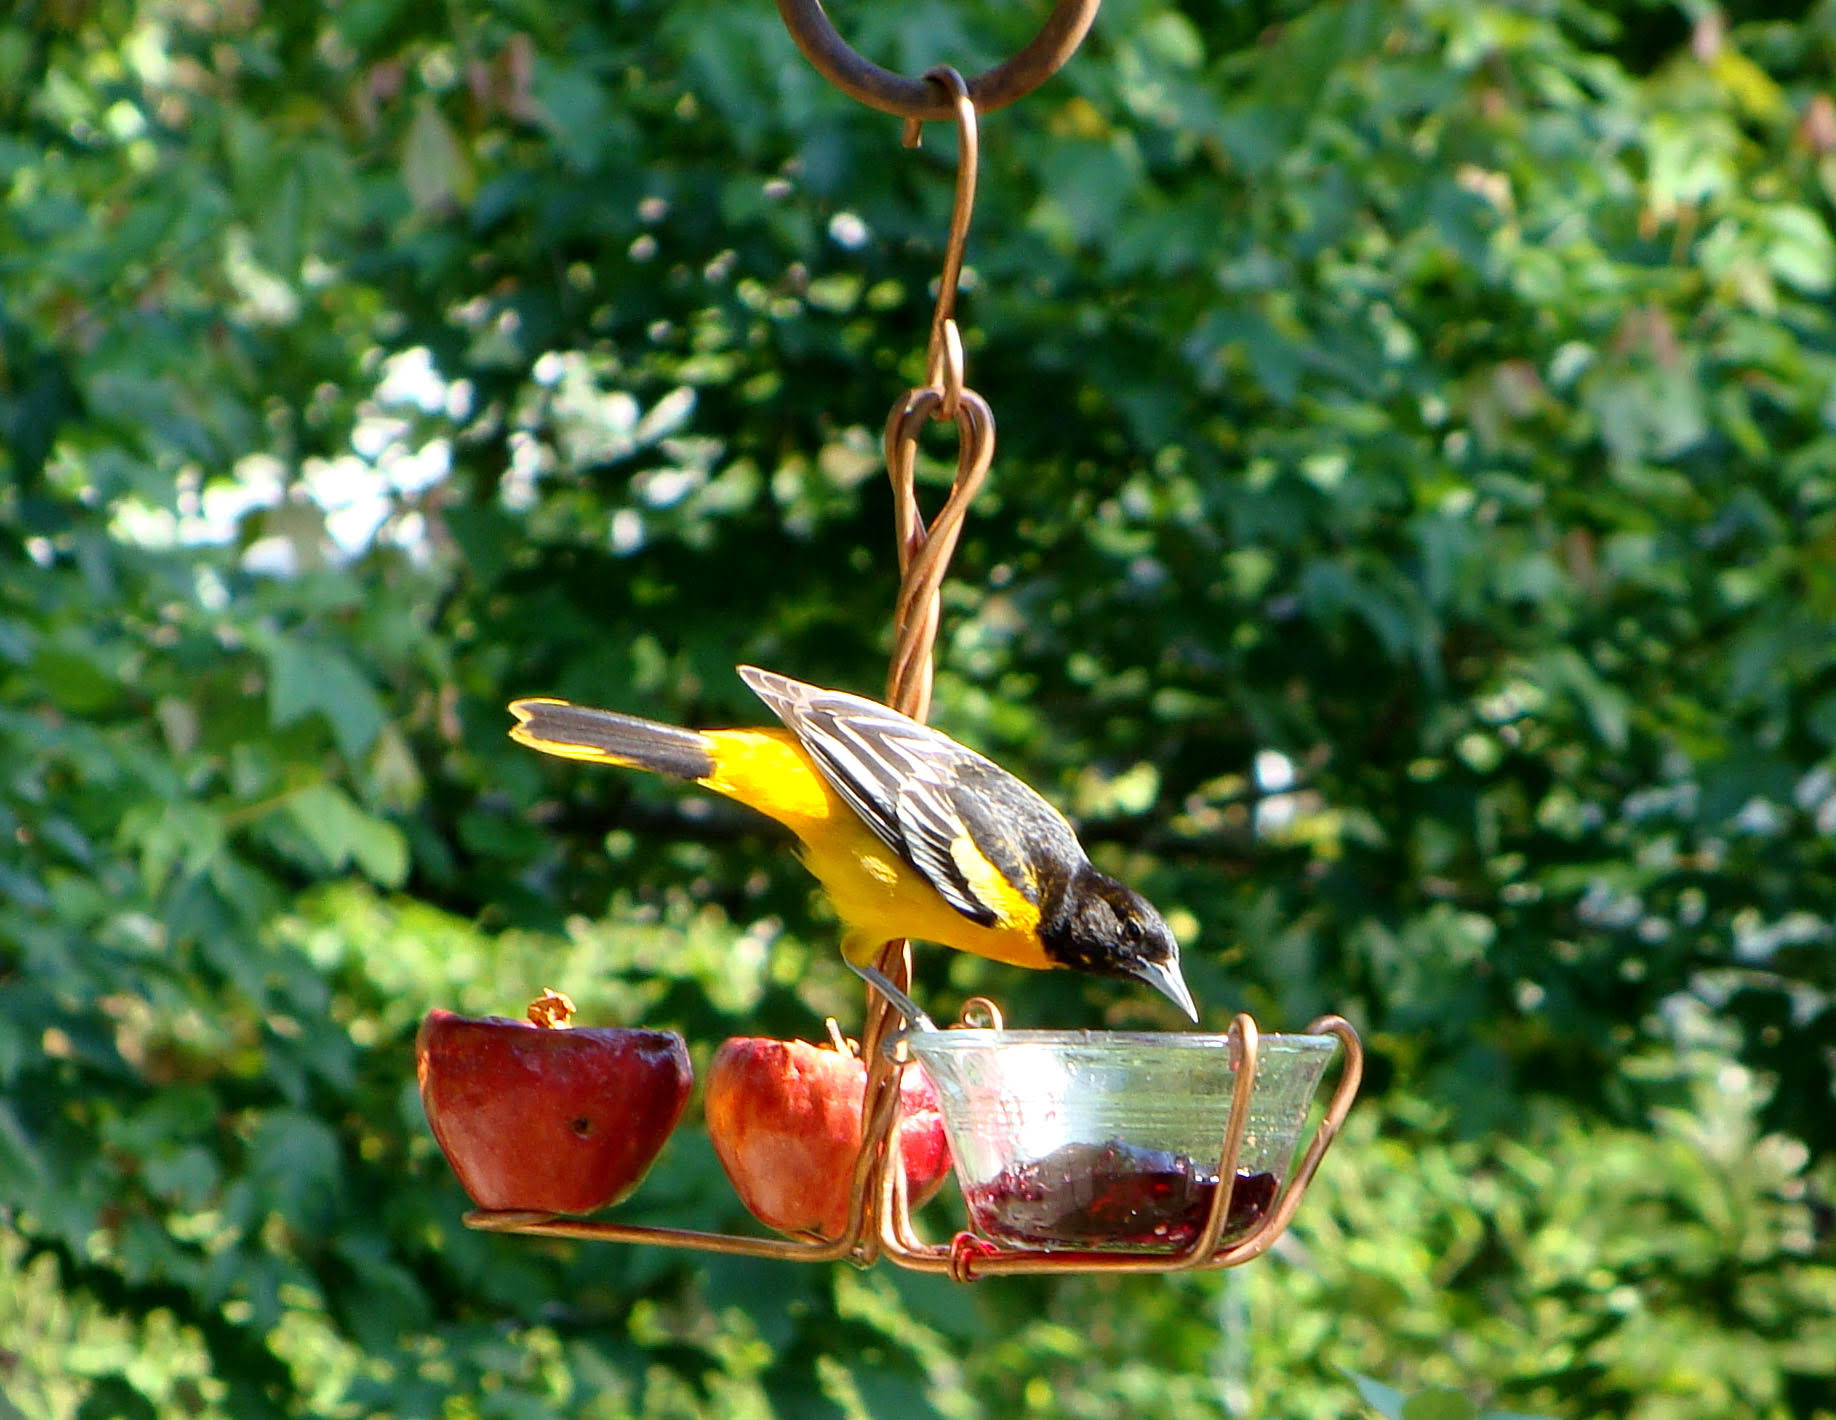 Songbird Essentials Sehhfrjl Fruit And Jelly Feeder